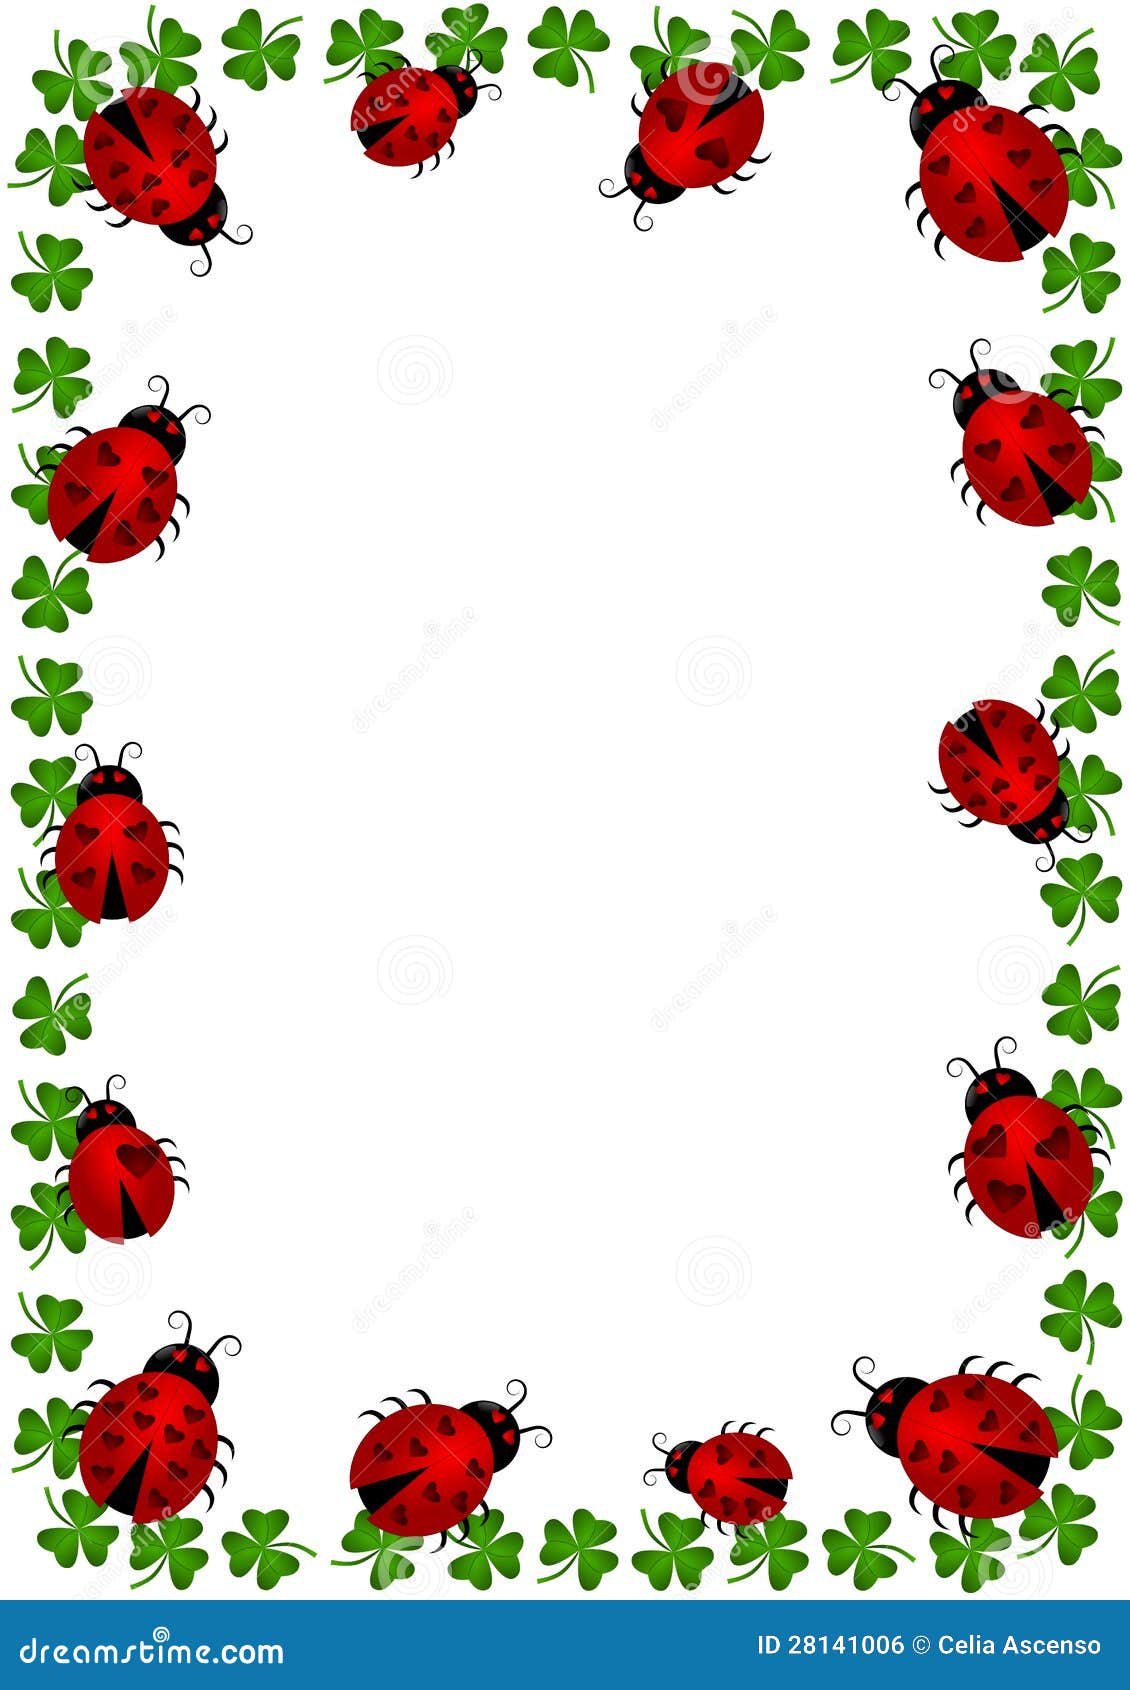 ladybug clip art borders - photo #14